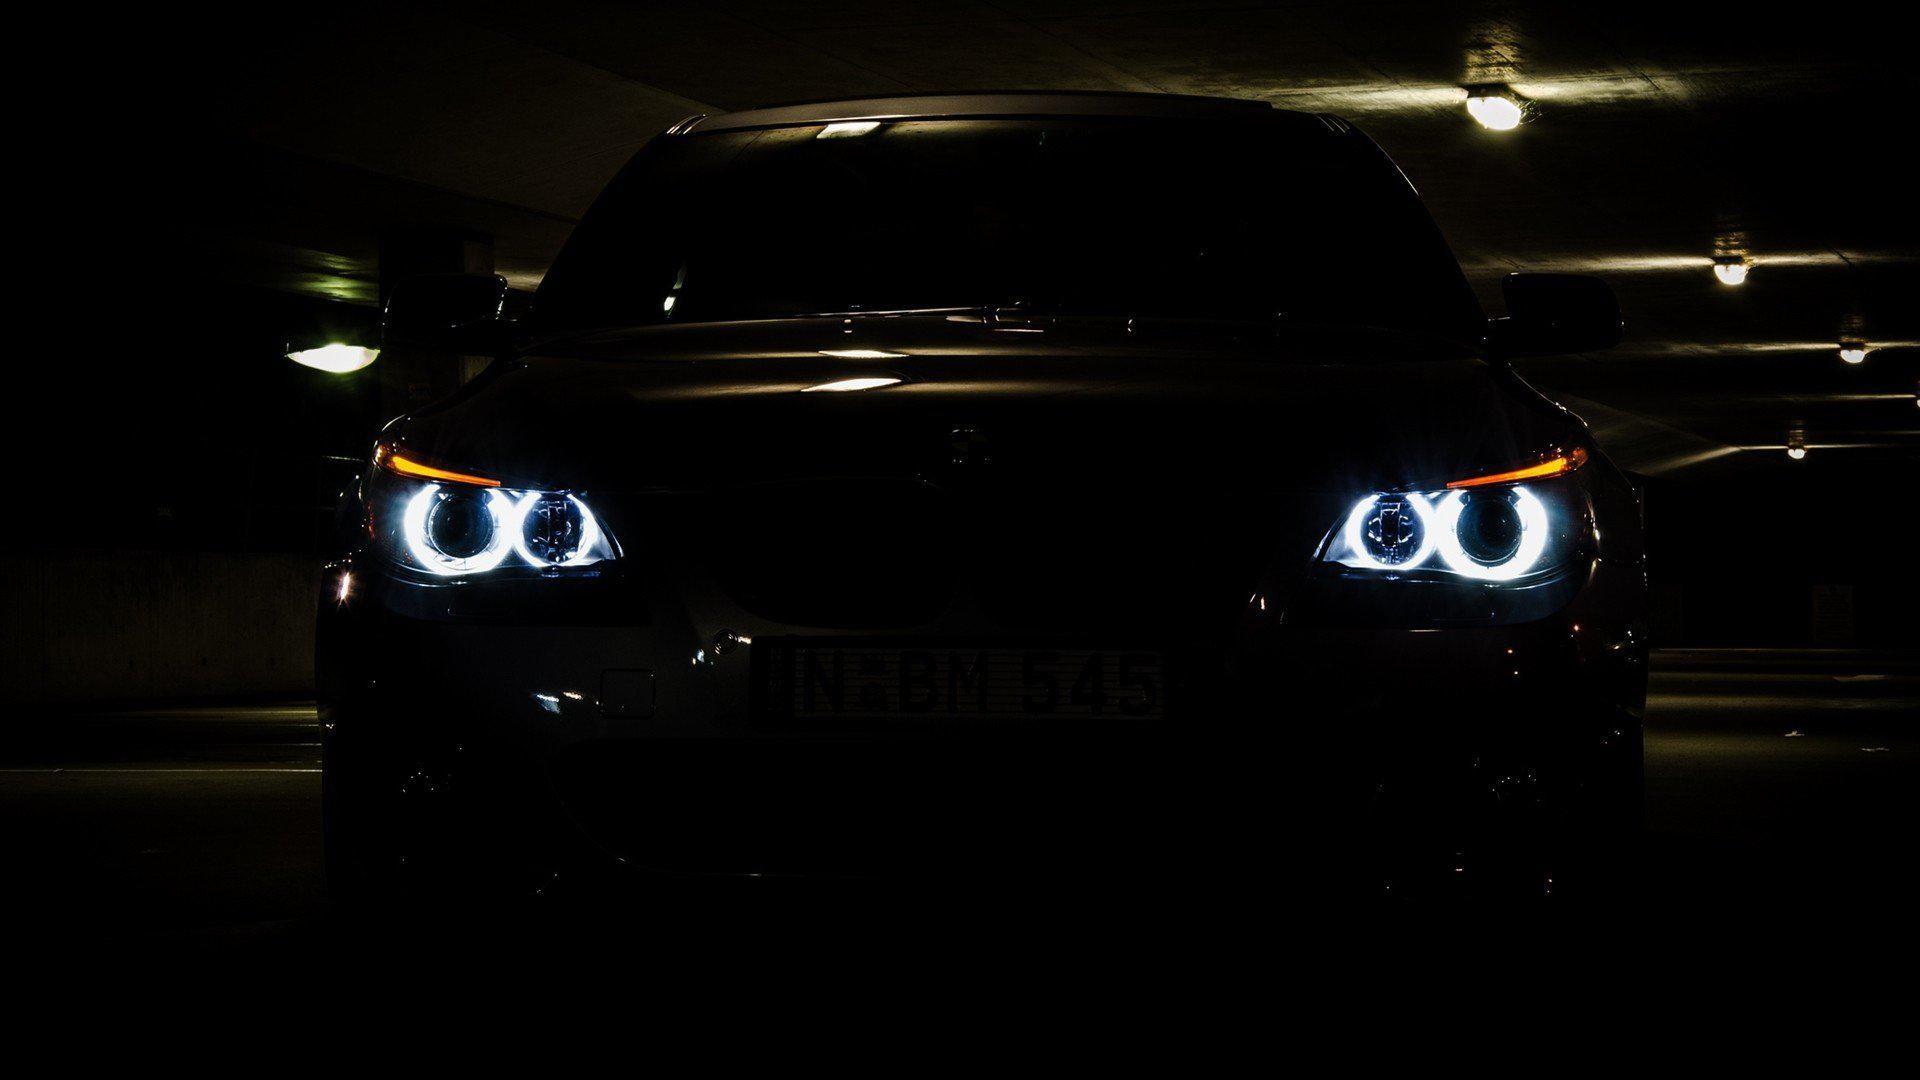 HD Bmw Lights Cars Vehicles Series E60 Automobile Eyes Angel Image